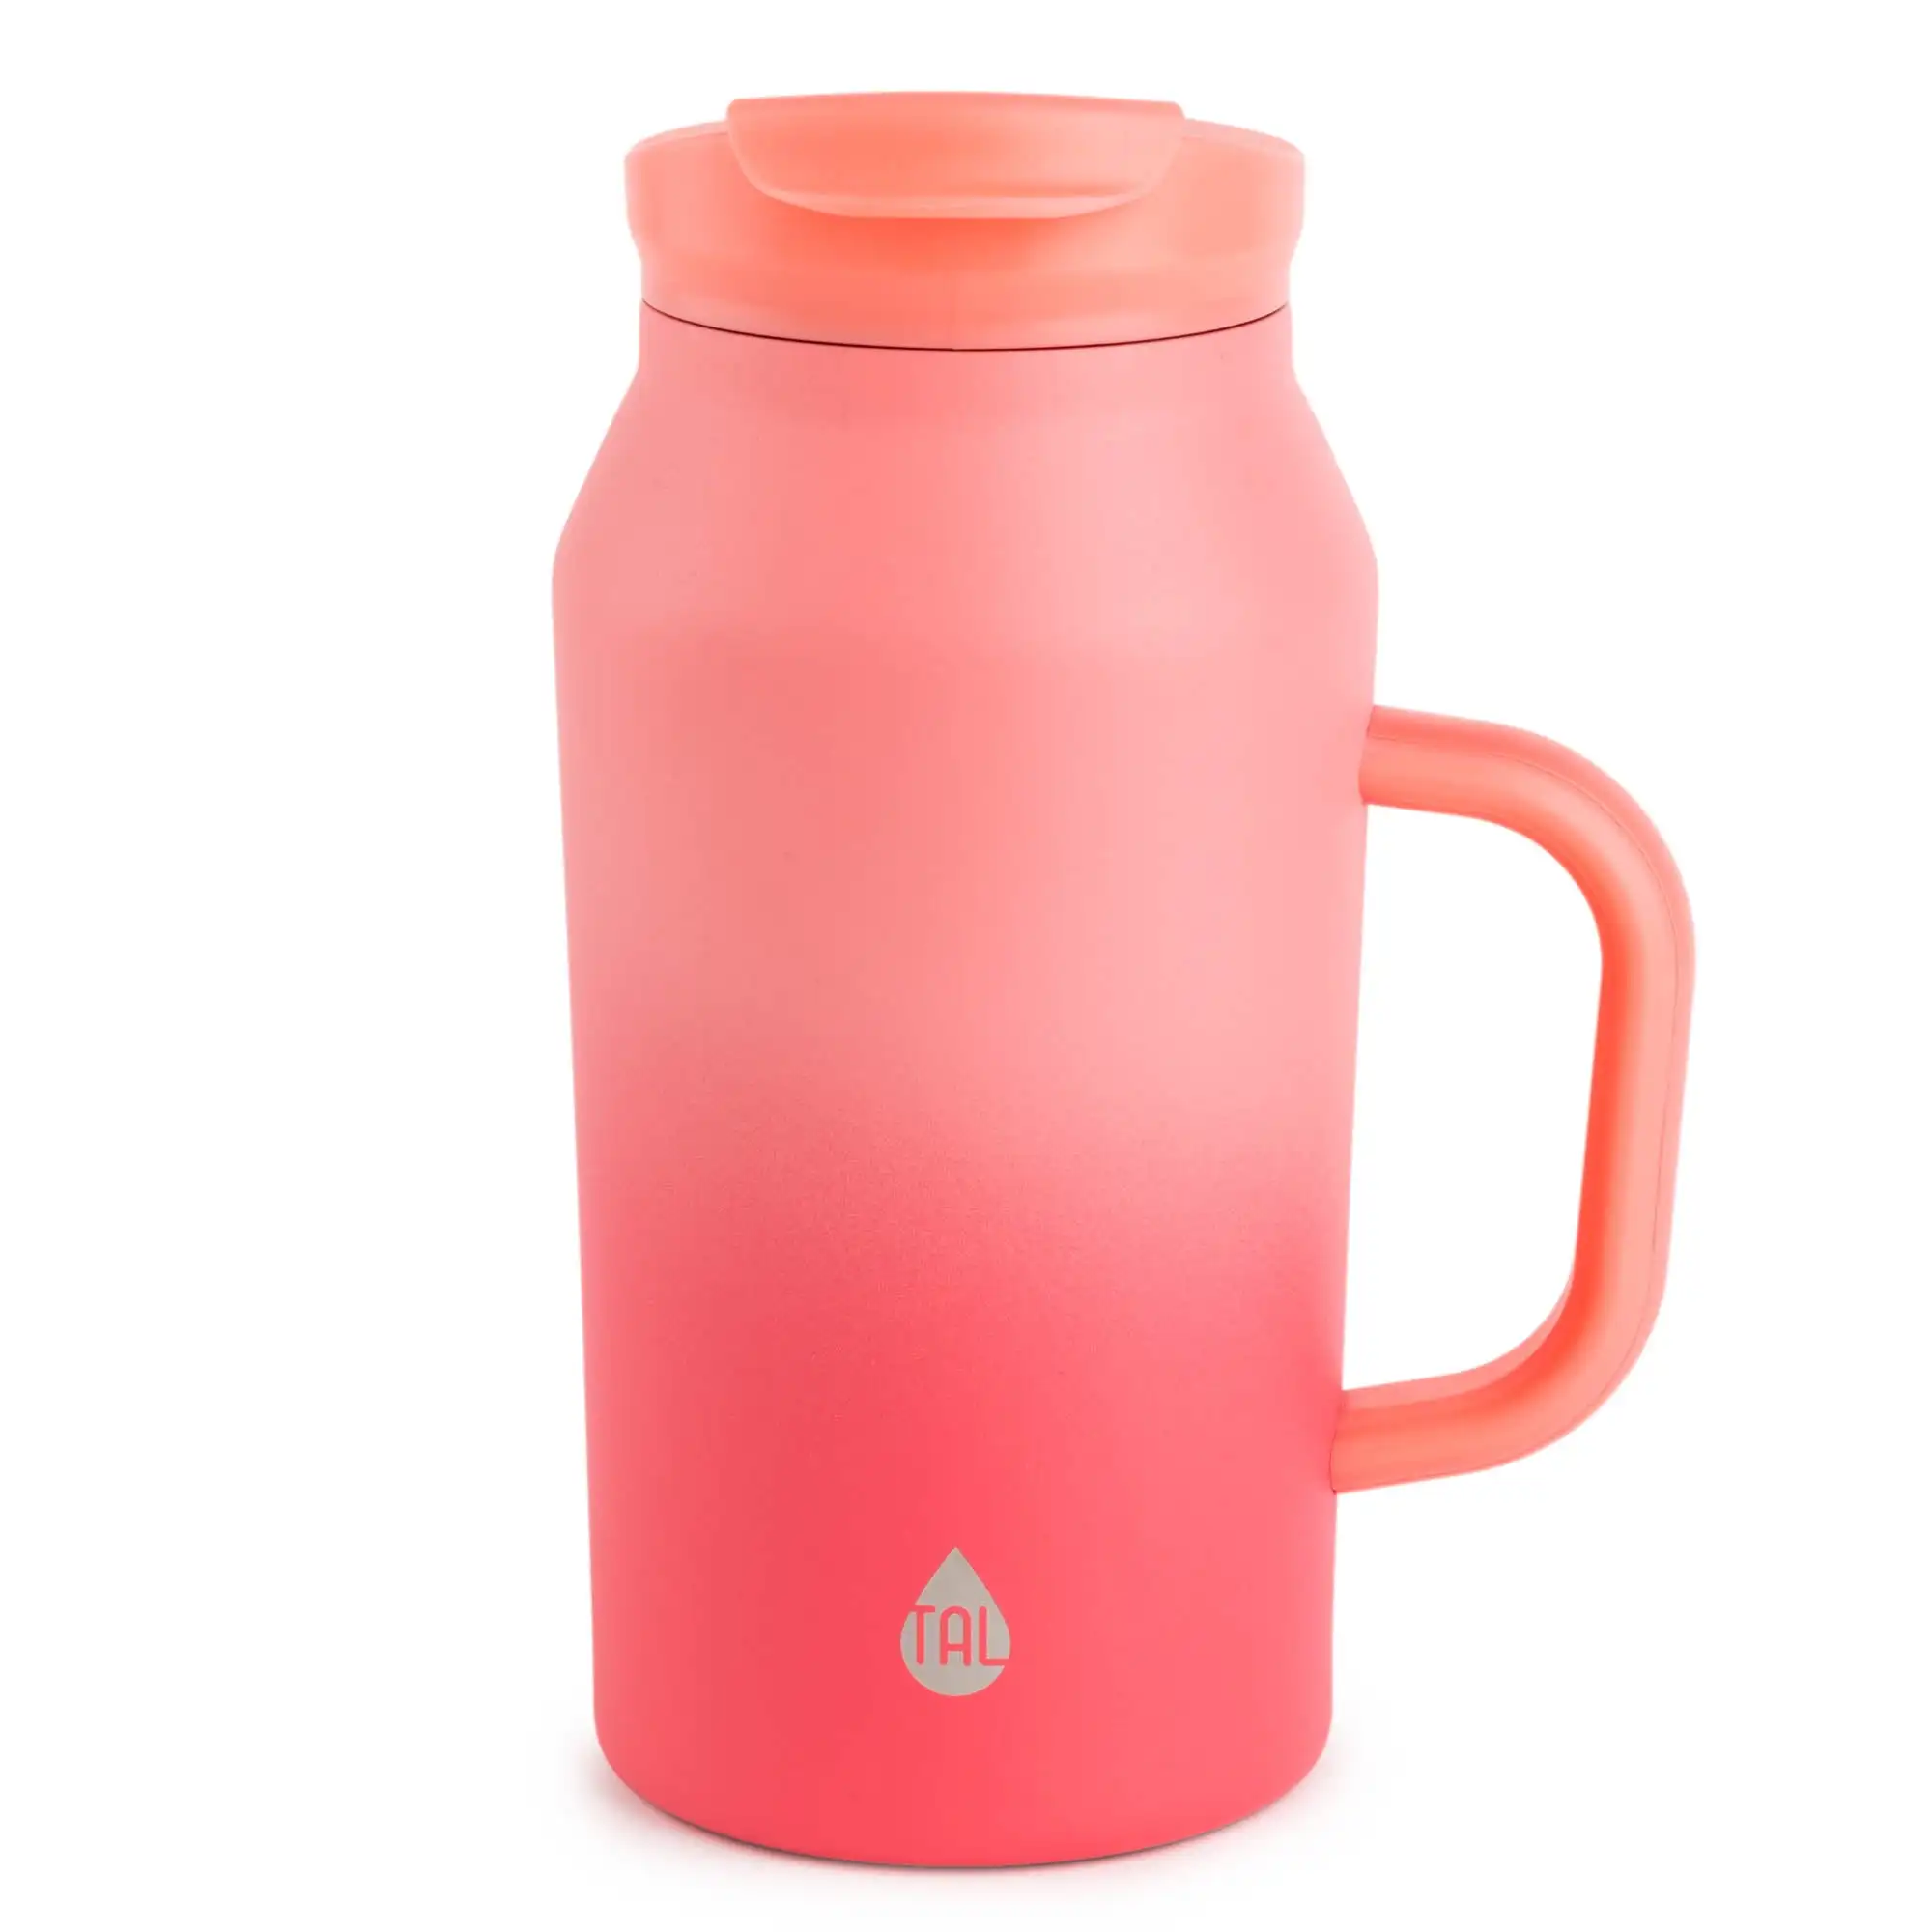 

TAL Stainless Steel Basin Water Bottle 40 fl oz, Pink Ombre